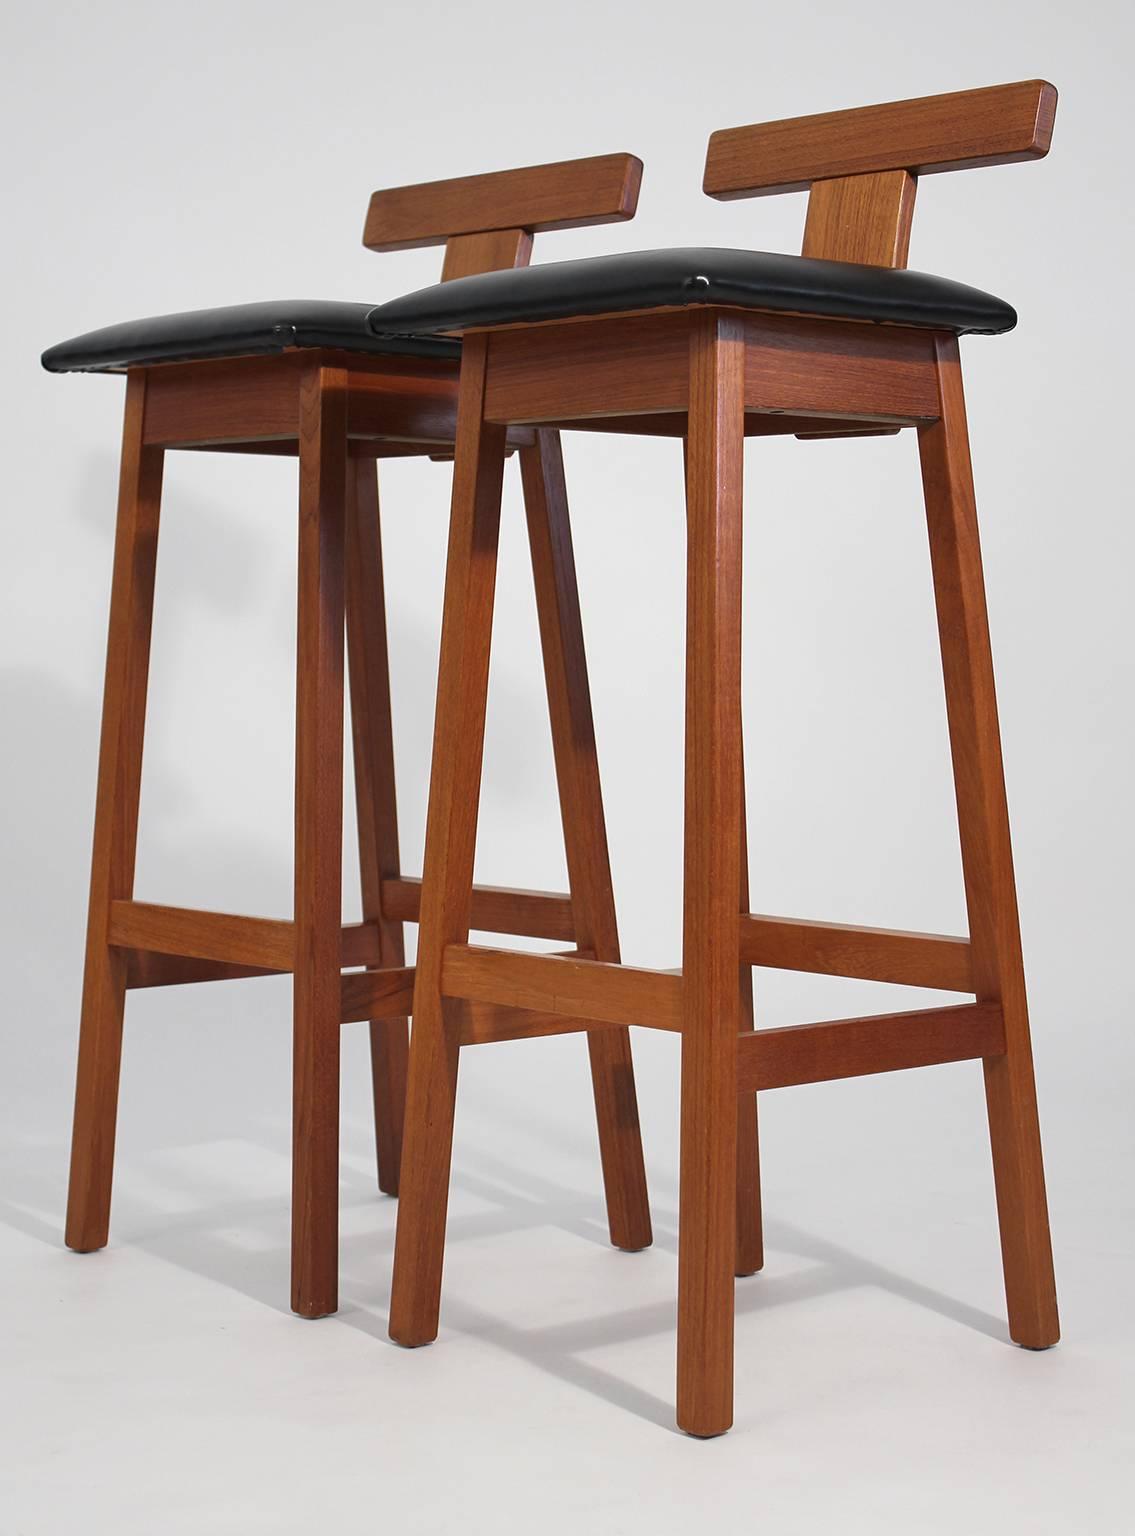 Pair of Dyrlund solid teak Danish bar stools. In excellent original condition with the original black vinyl seat. Great modernist design.